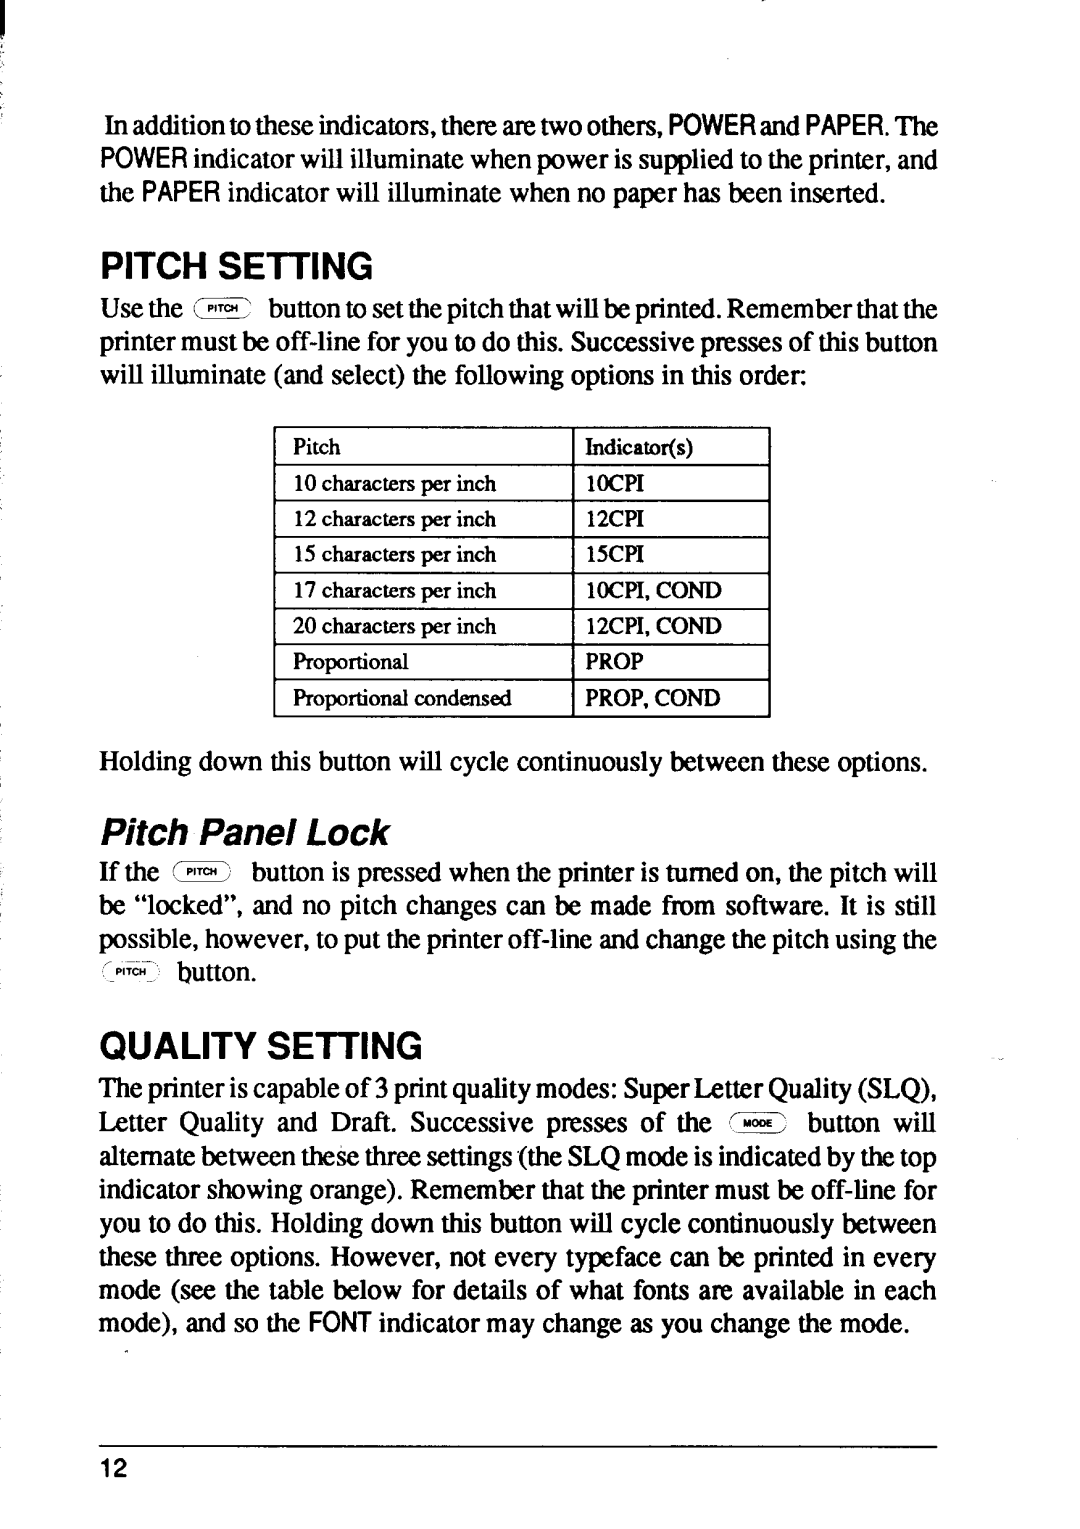 Star Micronics XB24-10, XB24-15 user manual Pitch Setting, Pitch Panel Lock, Quality Setting 